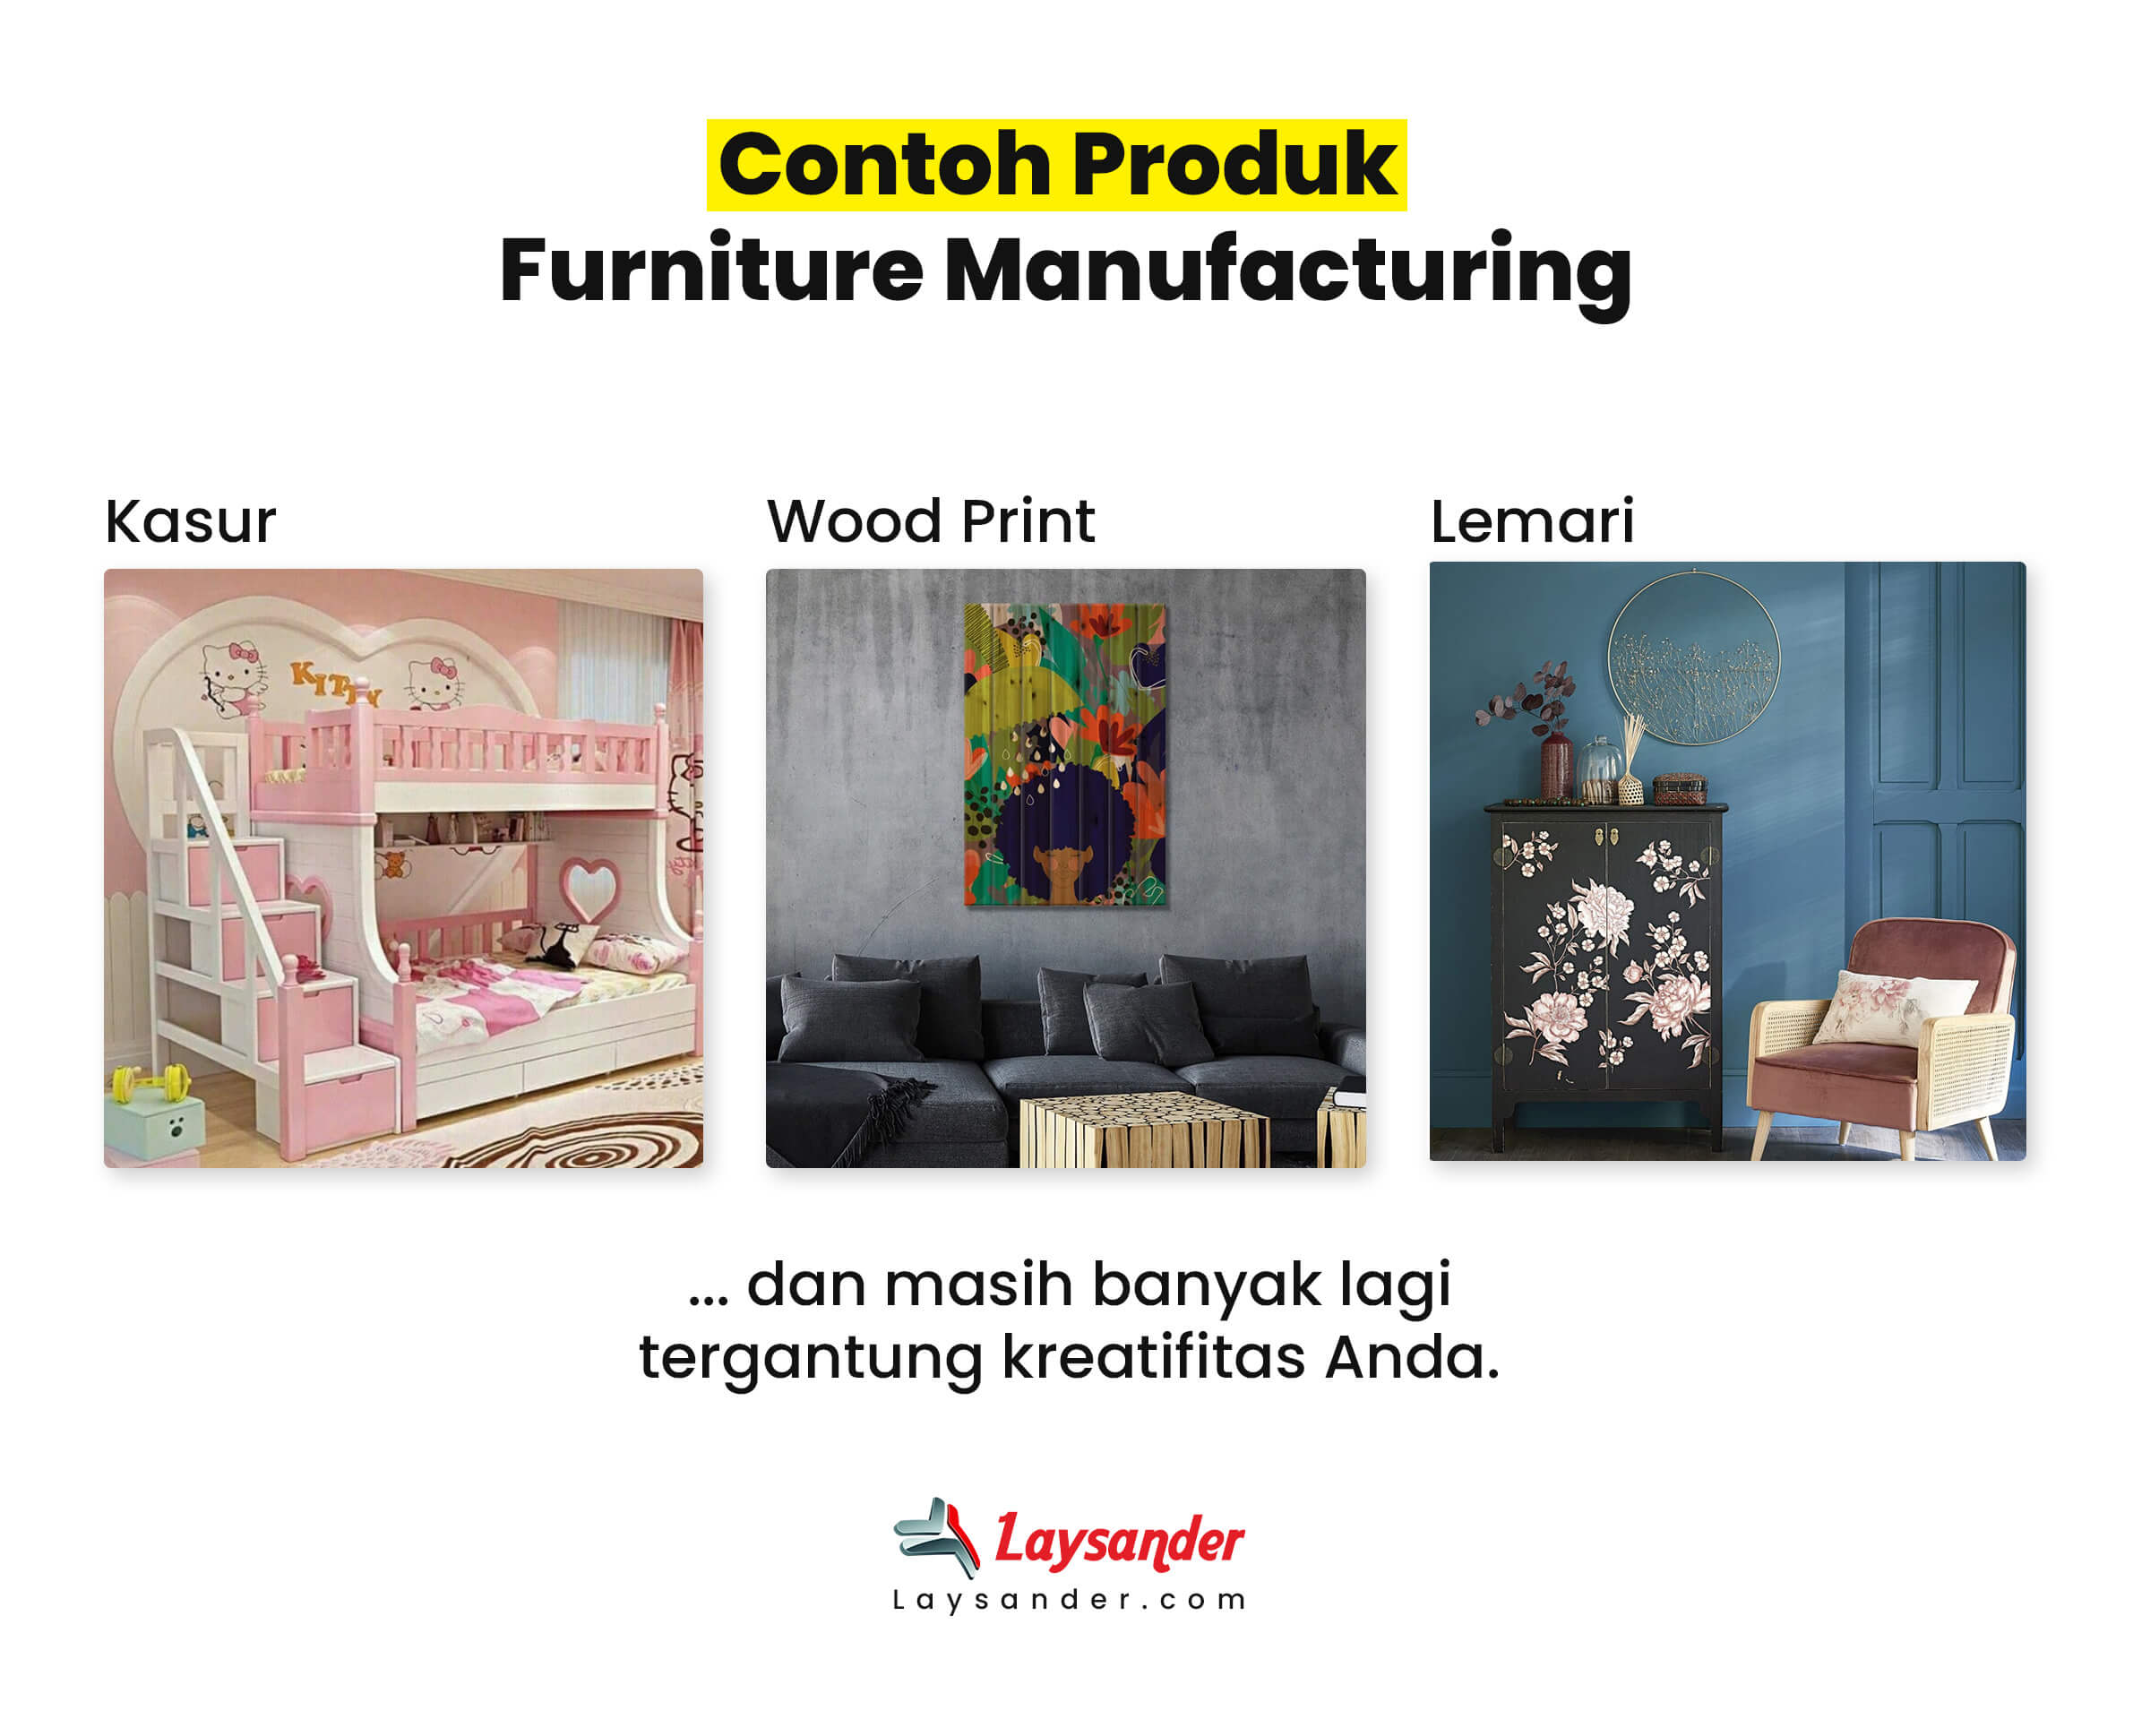 Contoh Produk Furniture Manufacturing